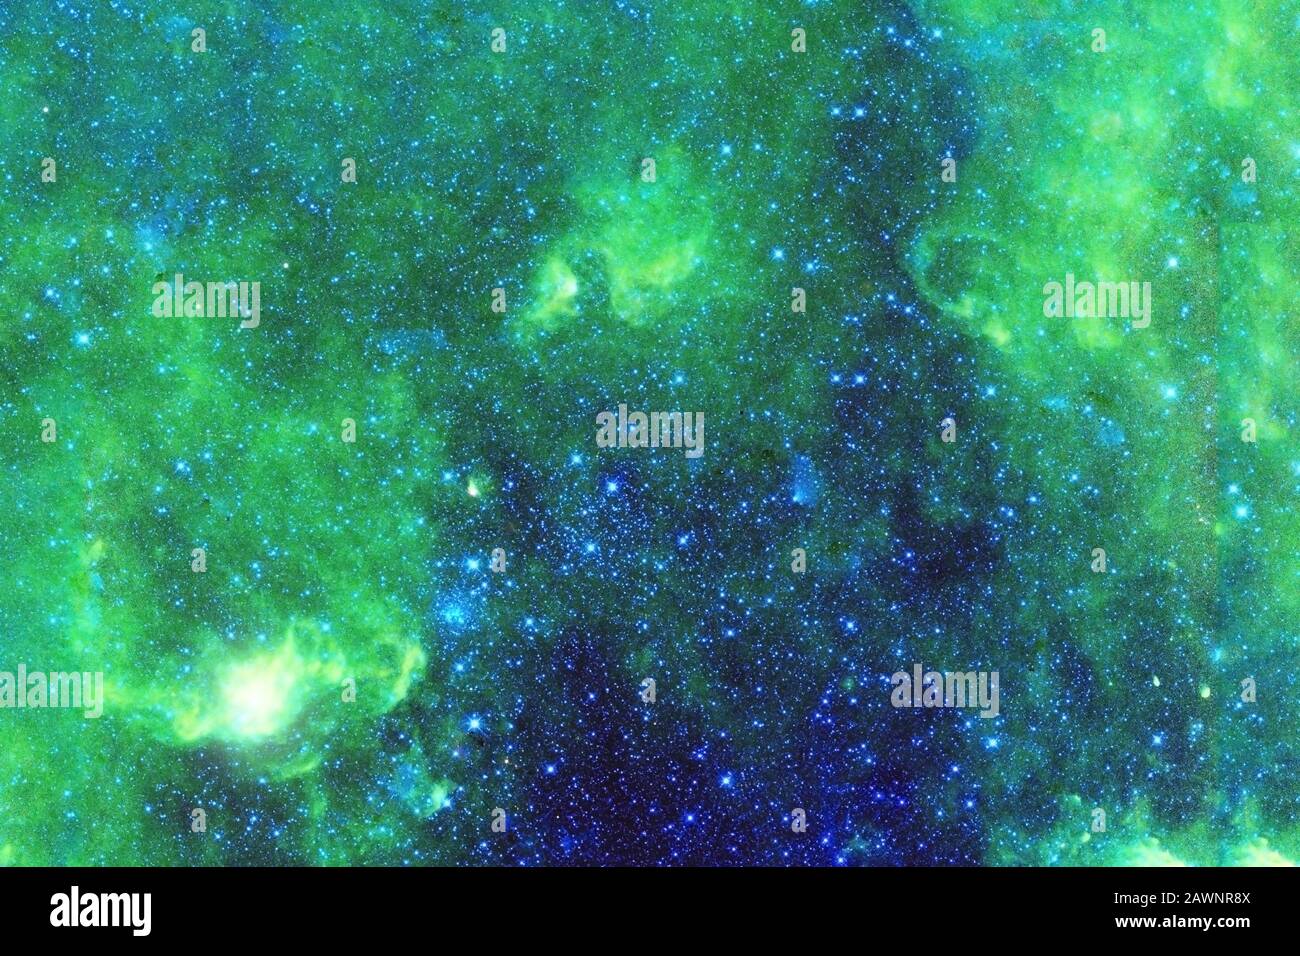 green stars and galaxies